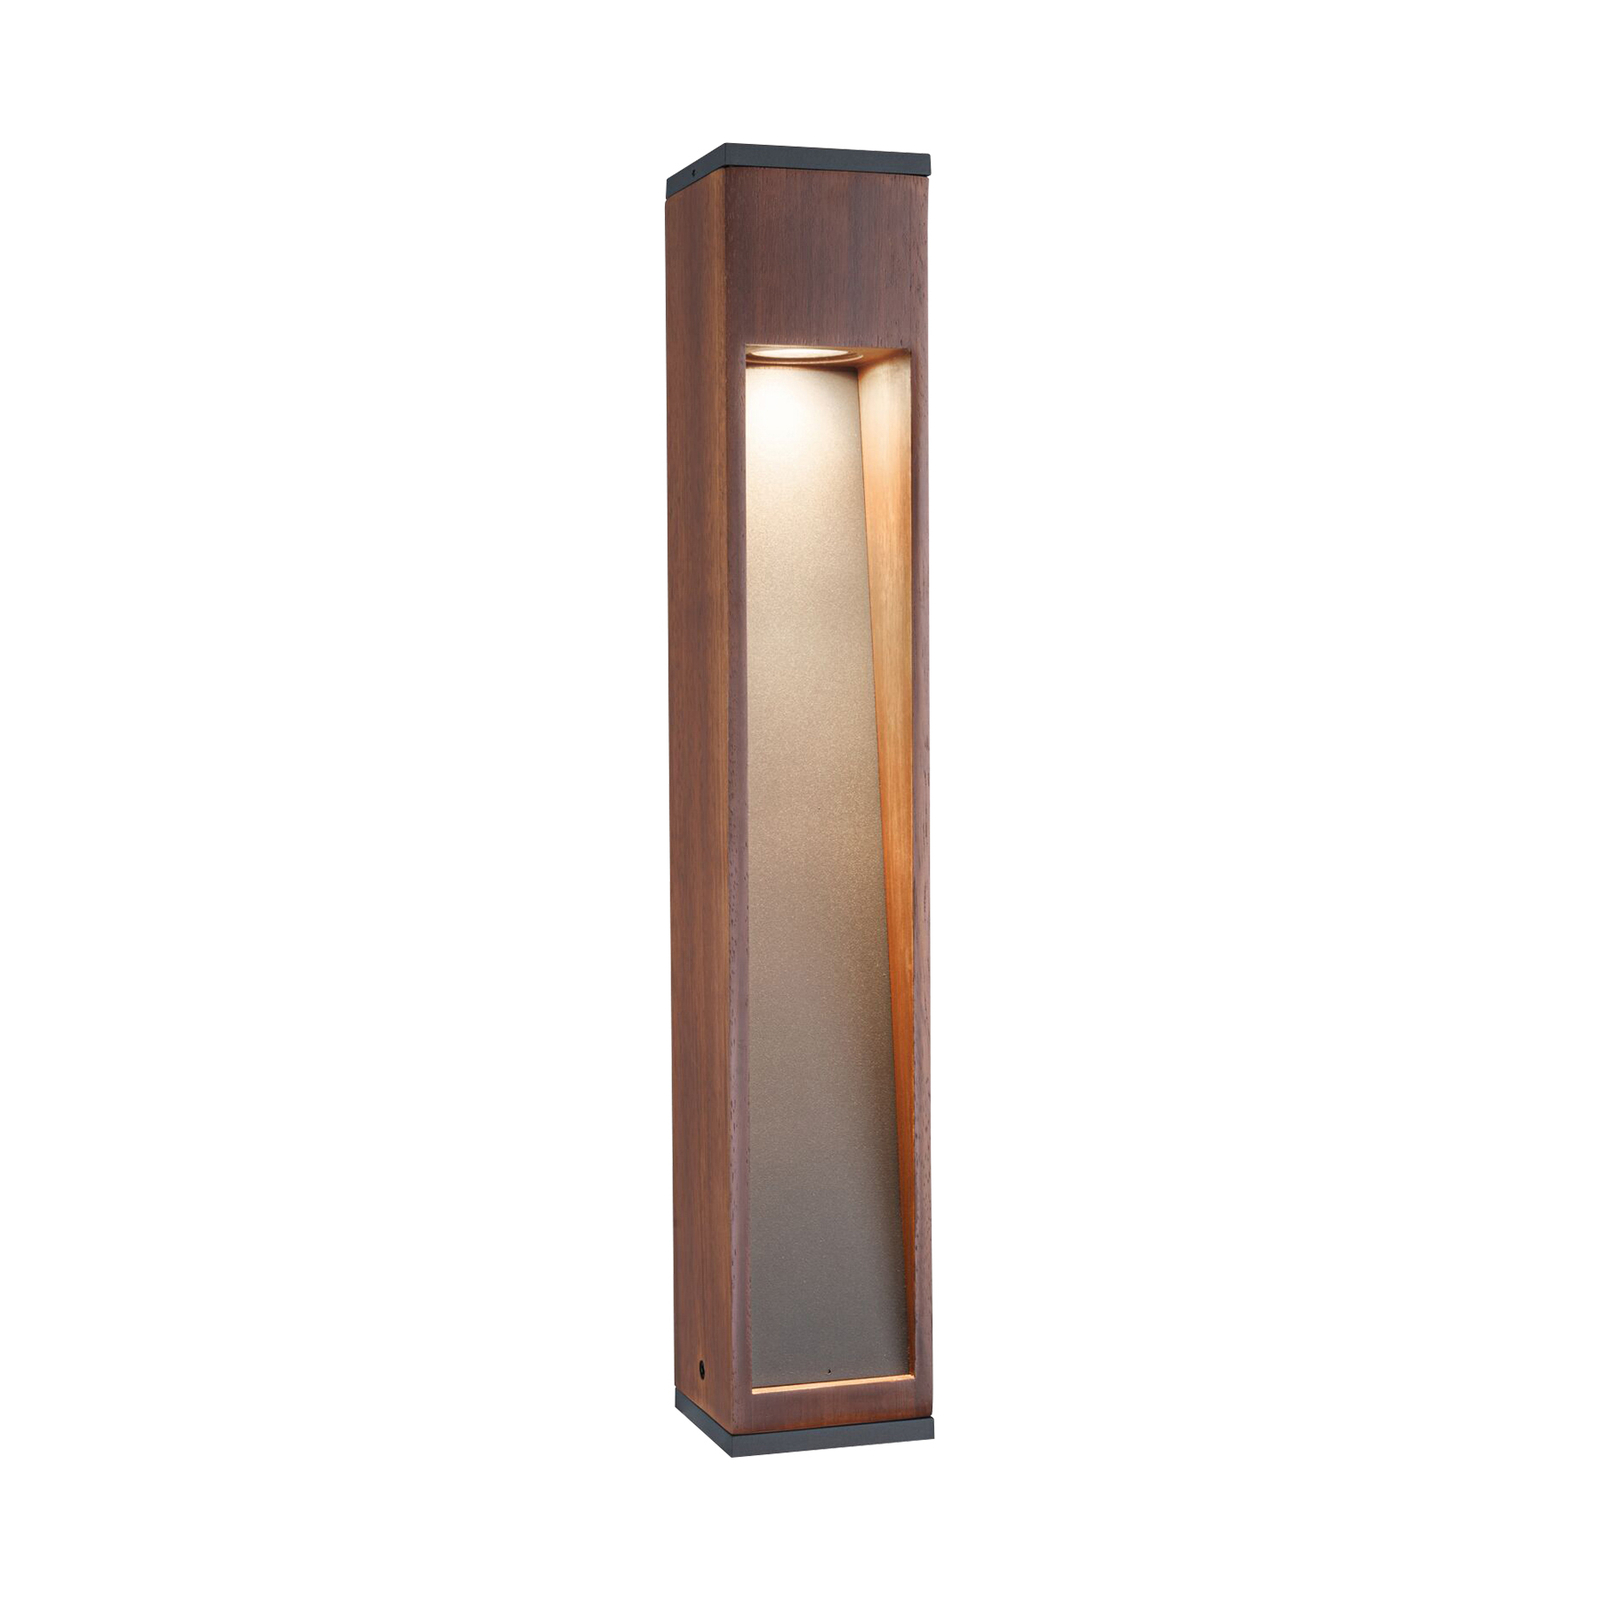 Paulmann Trabia LED pedestal light wood, height 60 cm